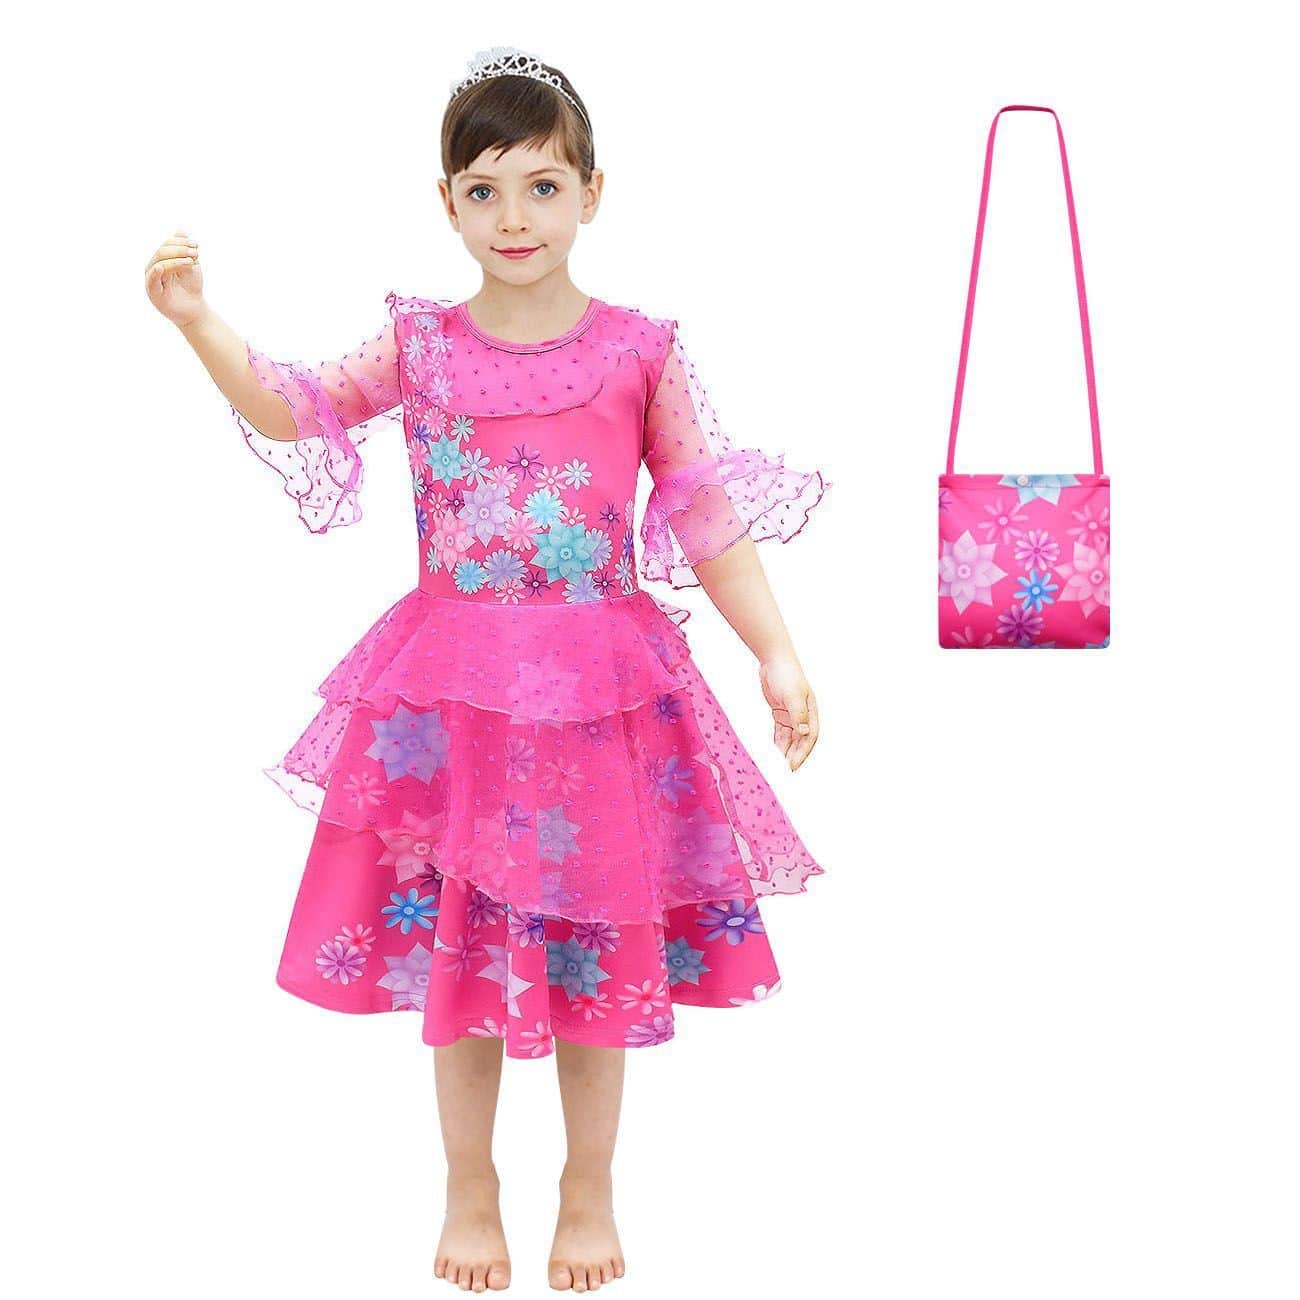 Isabela Encanto Dress Princess Play Dress with Bag - Rose Red